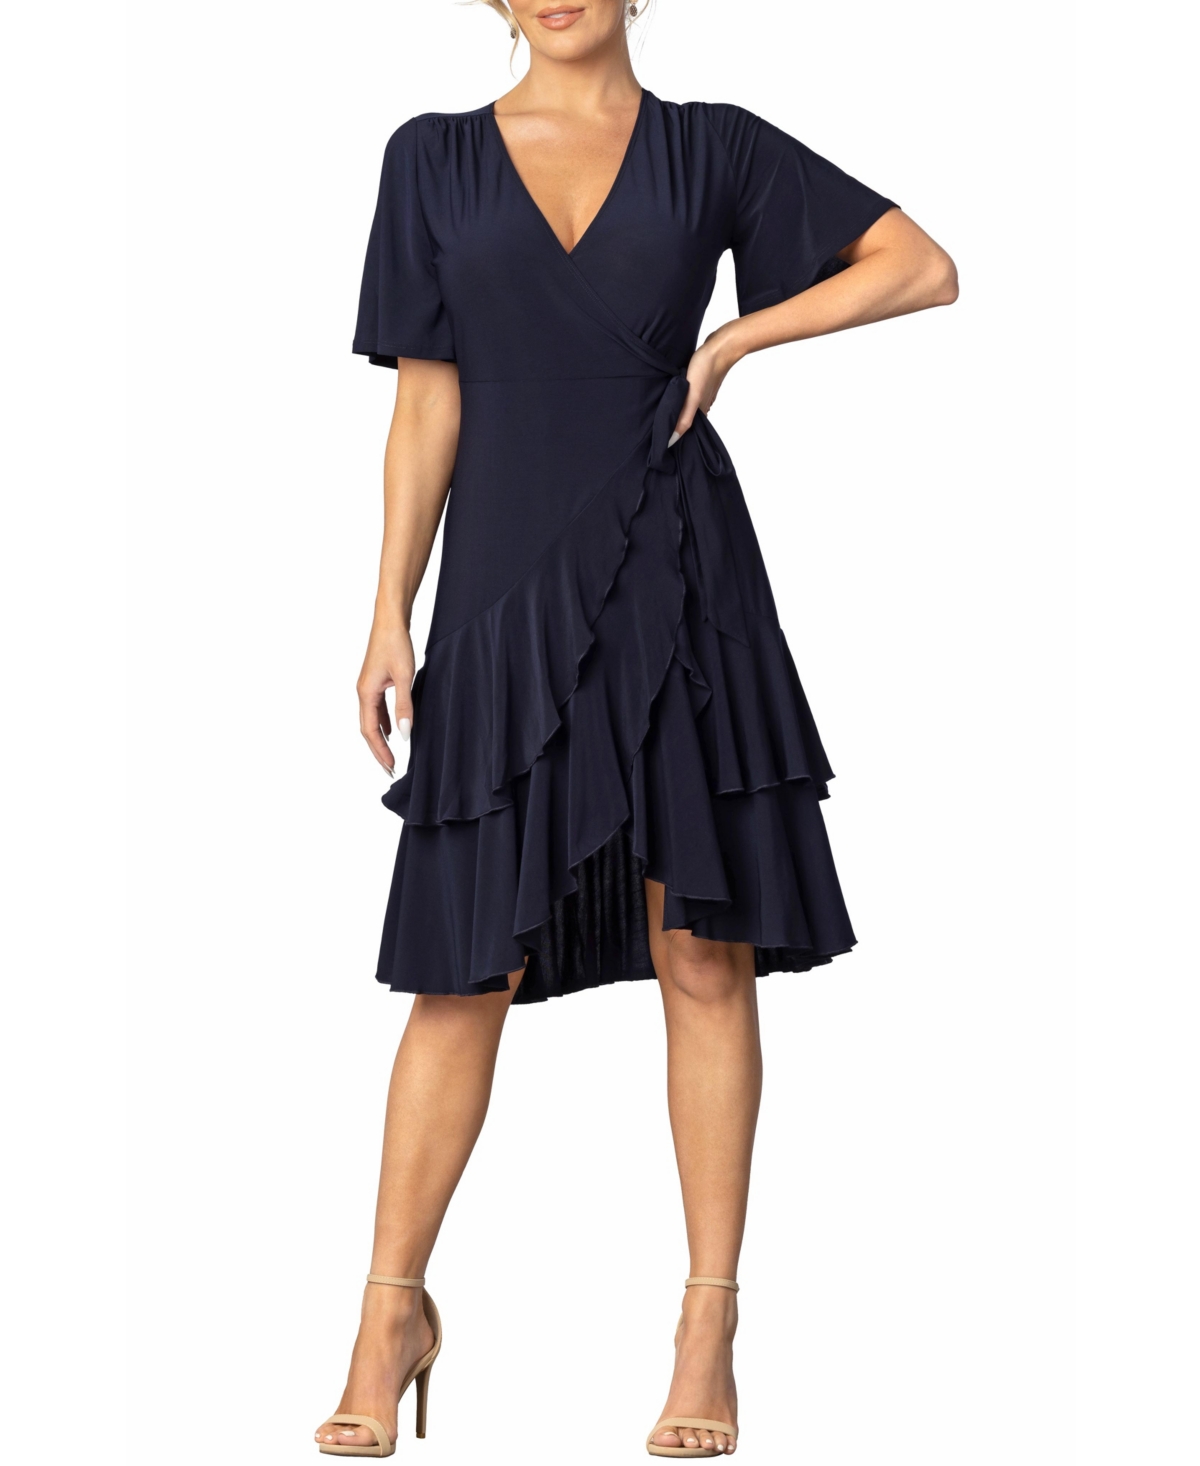 Women's Miranda Double Ruffle Wrap Dress with Sleeves - Nouveau navy